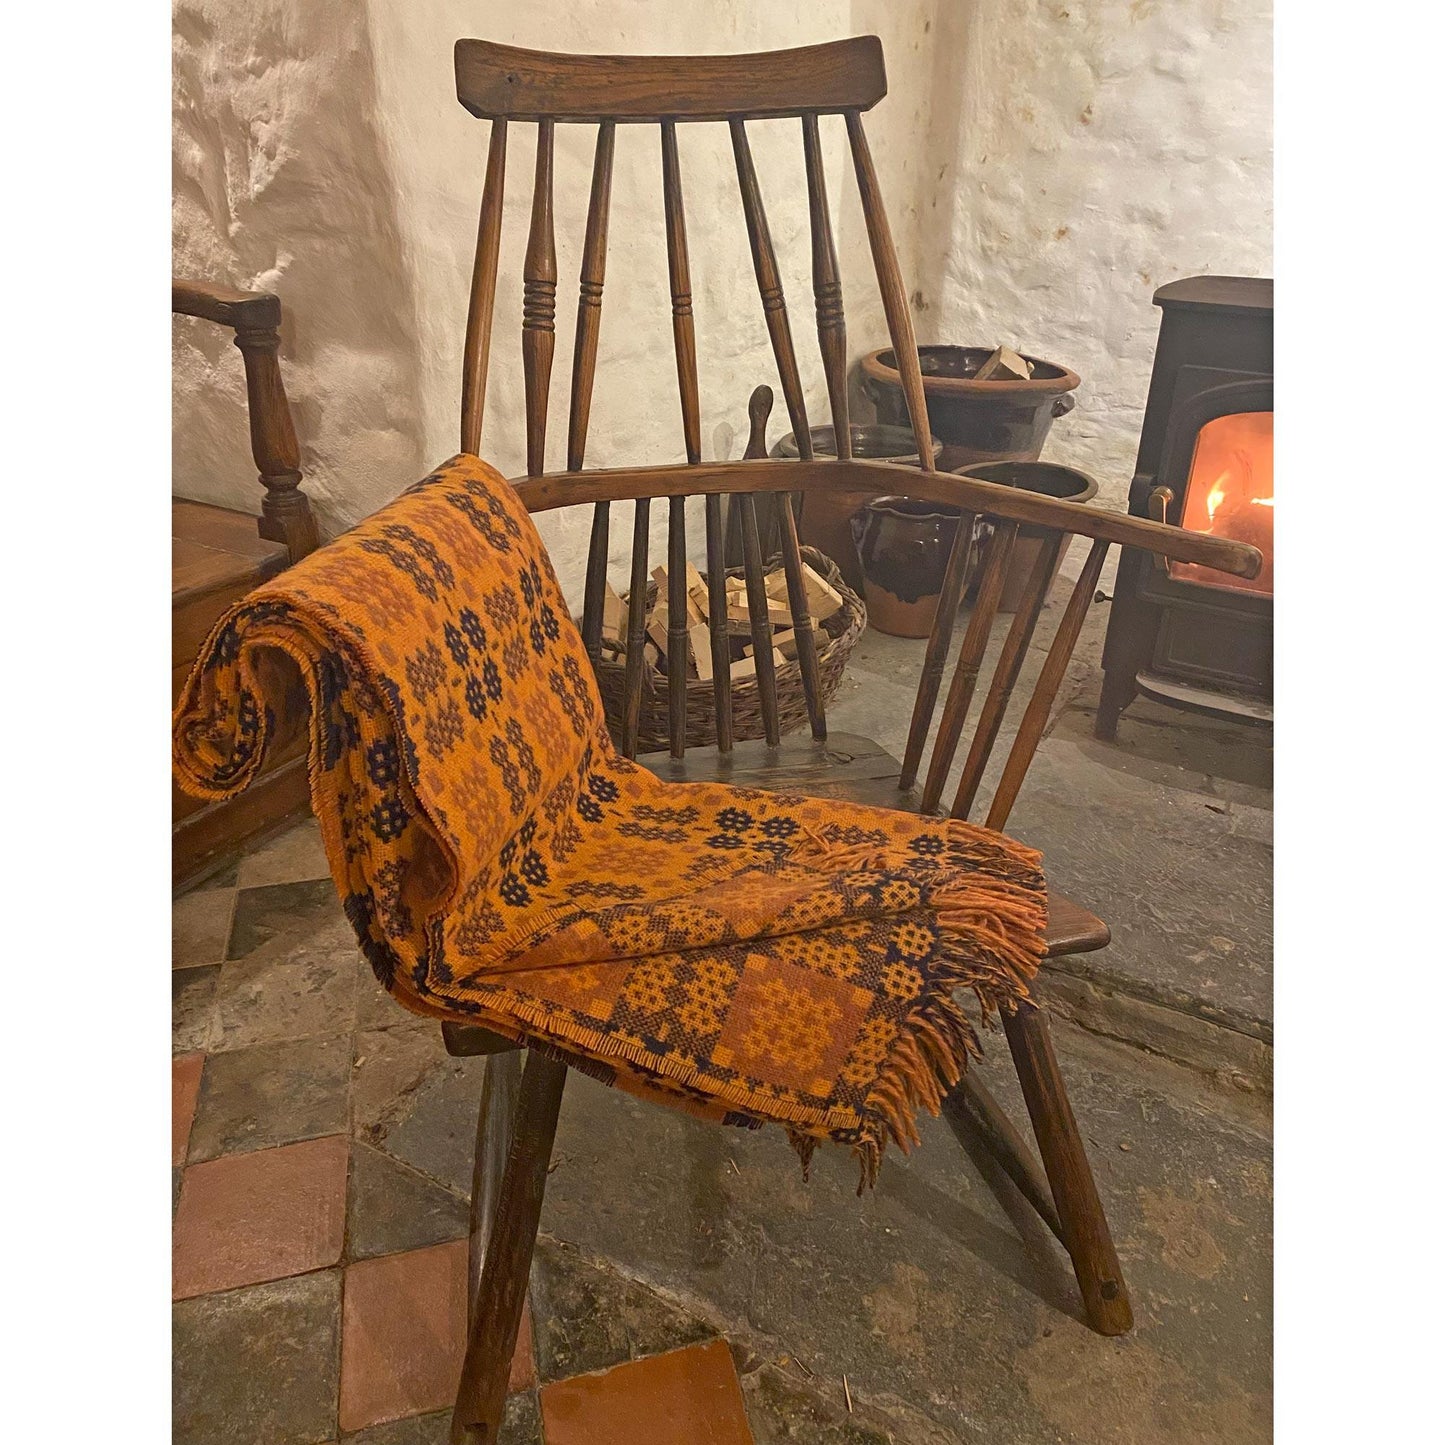 Throw / Blanket - Welsh Tapestry / Carthen Ysgafn - Caernarfon - 100% Wool - Pumpkin Spice